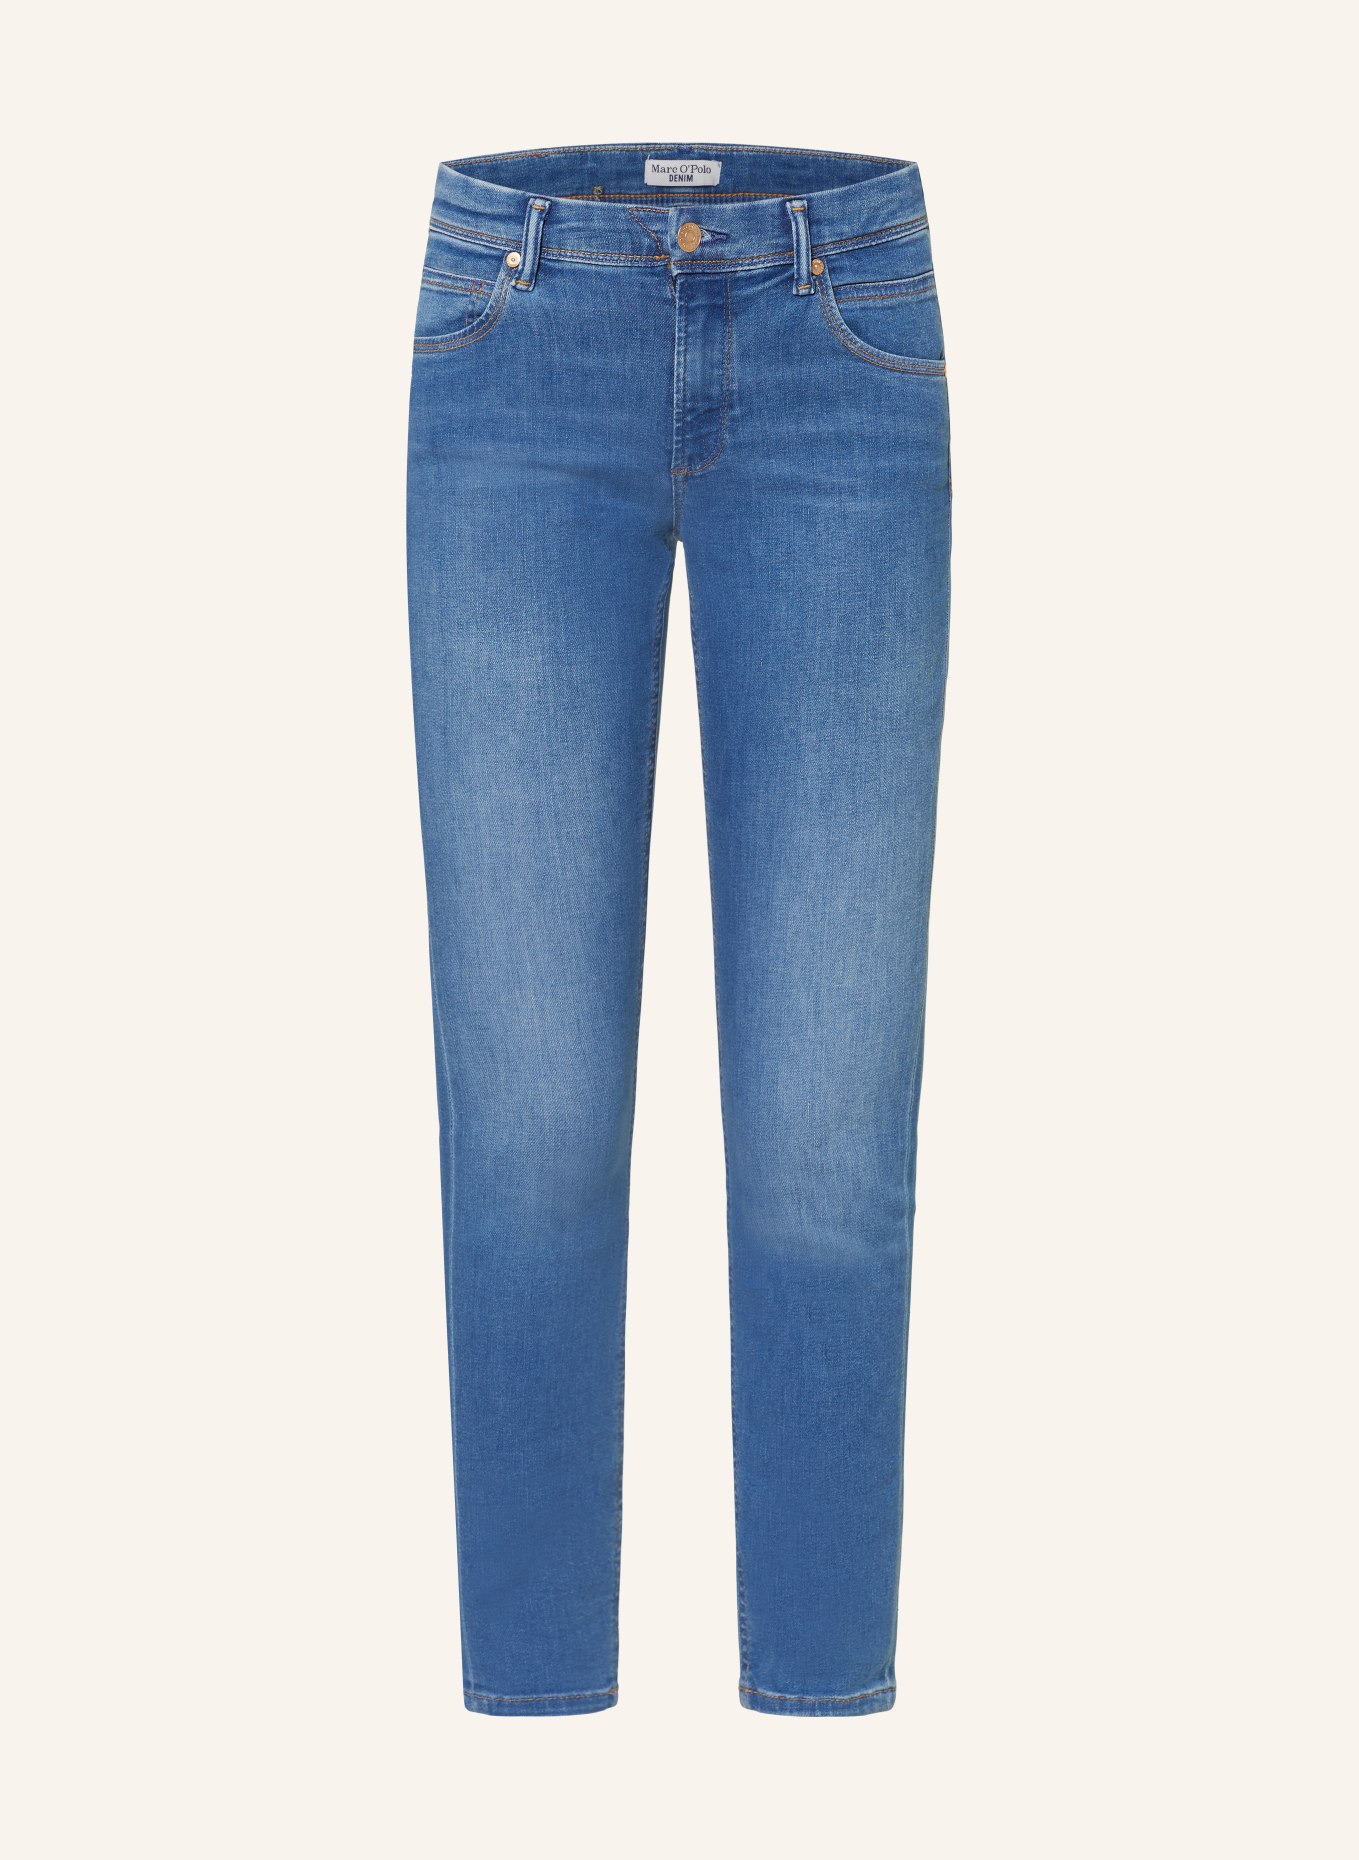 Marc O'Polo DENIM Skinny Jeans, Farbe: Q05 multi/mid cobalt blue (Bild 1)